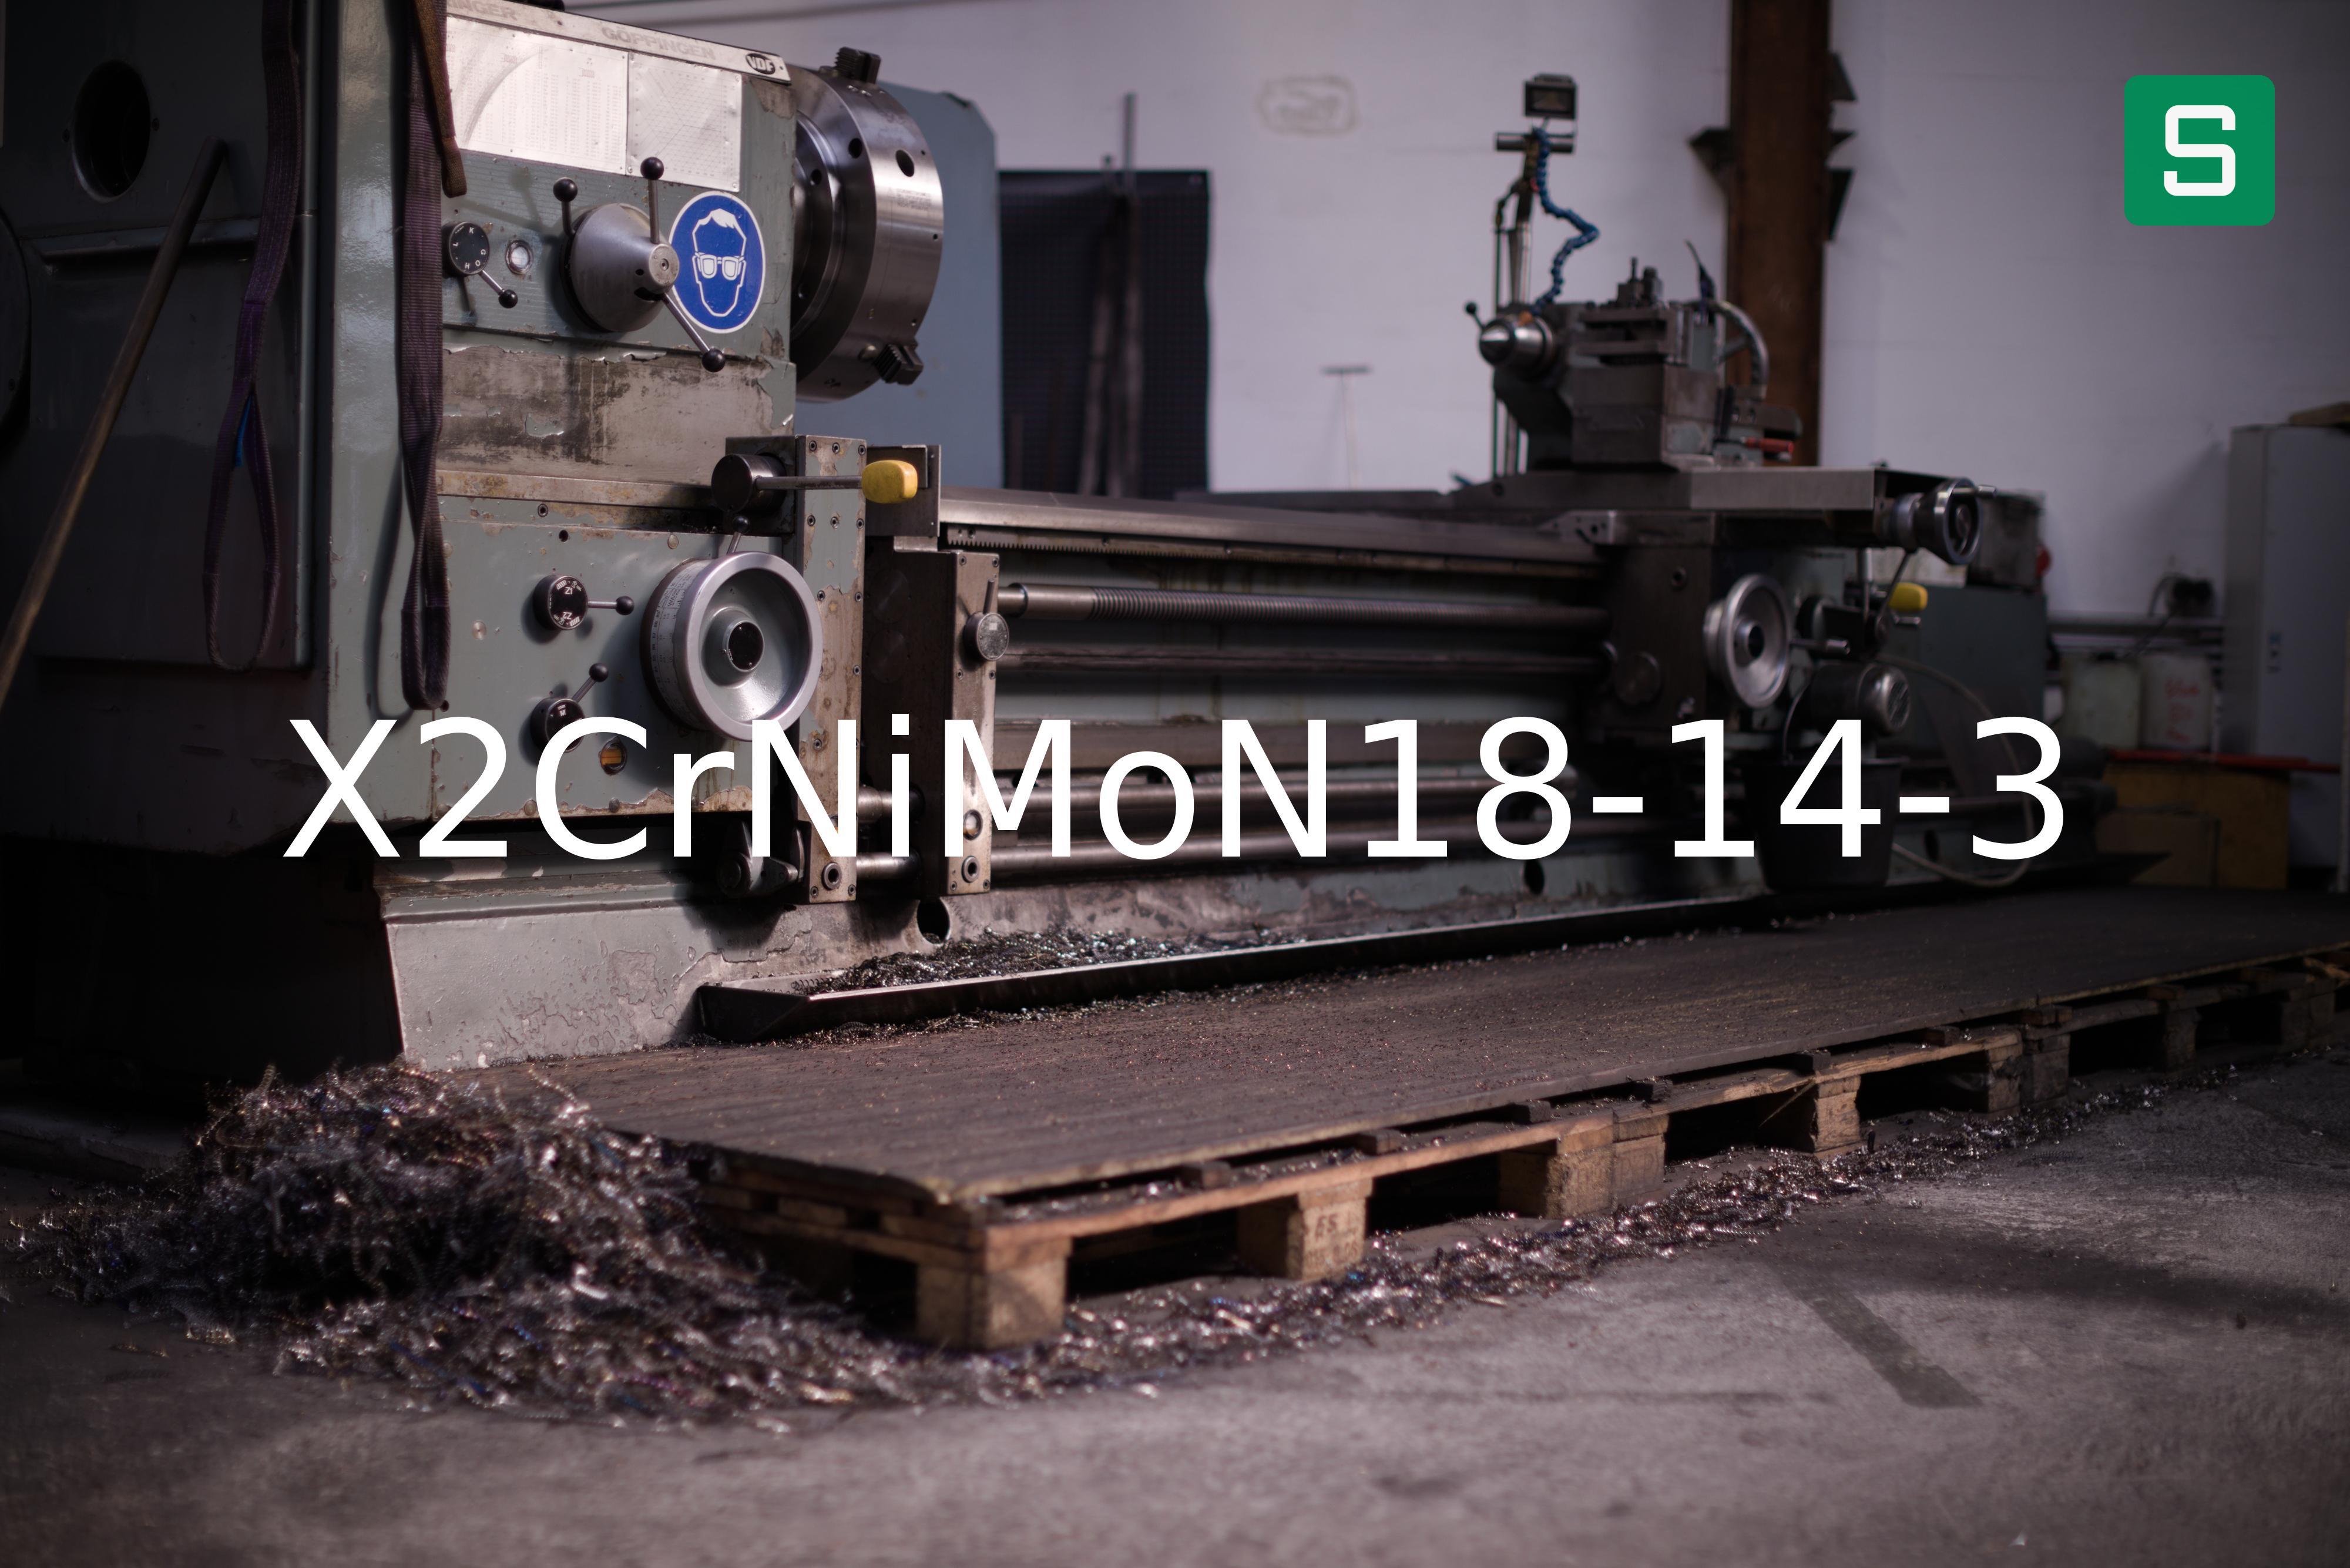 Steel Material: X2CrNiMoN18-14-3